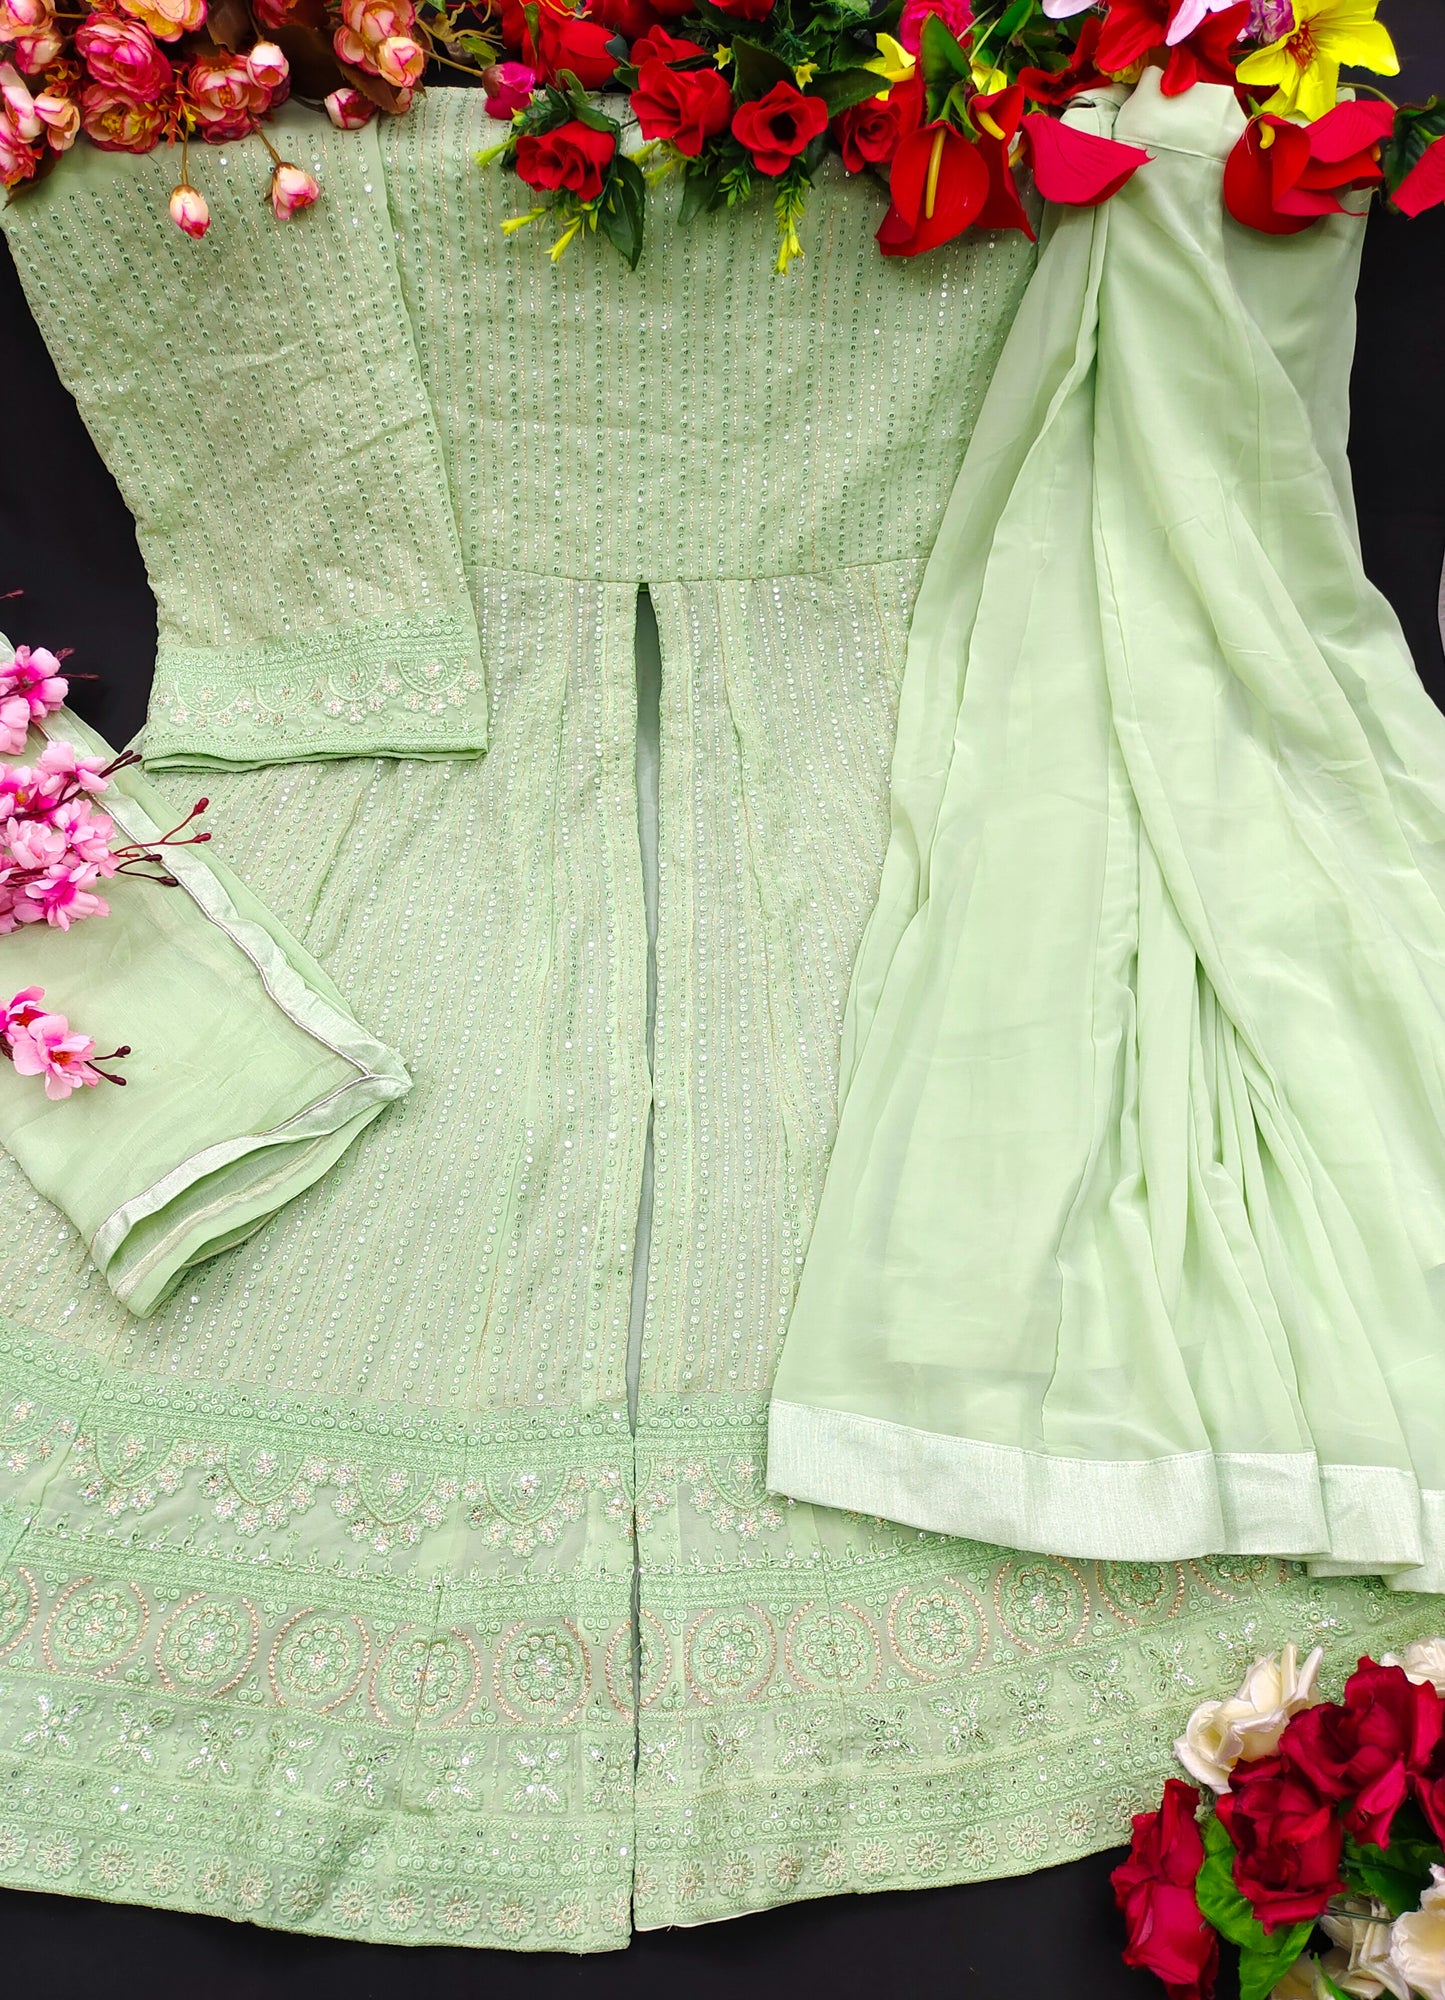 Trending  Pista Green Color  Designer Long Gown For Best Looks